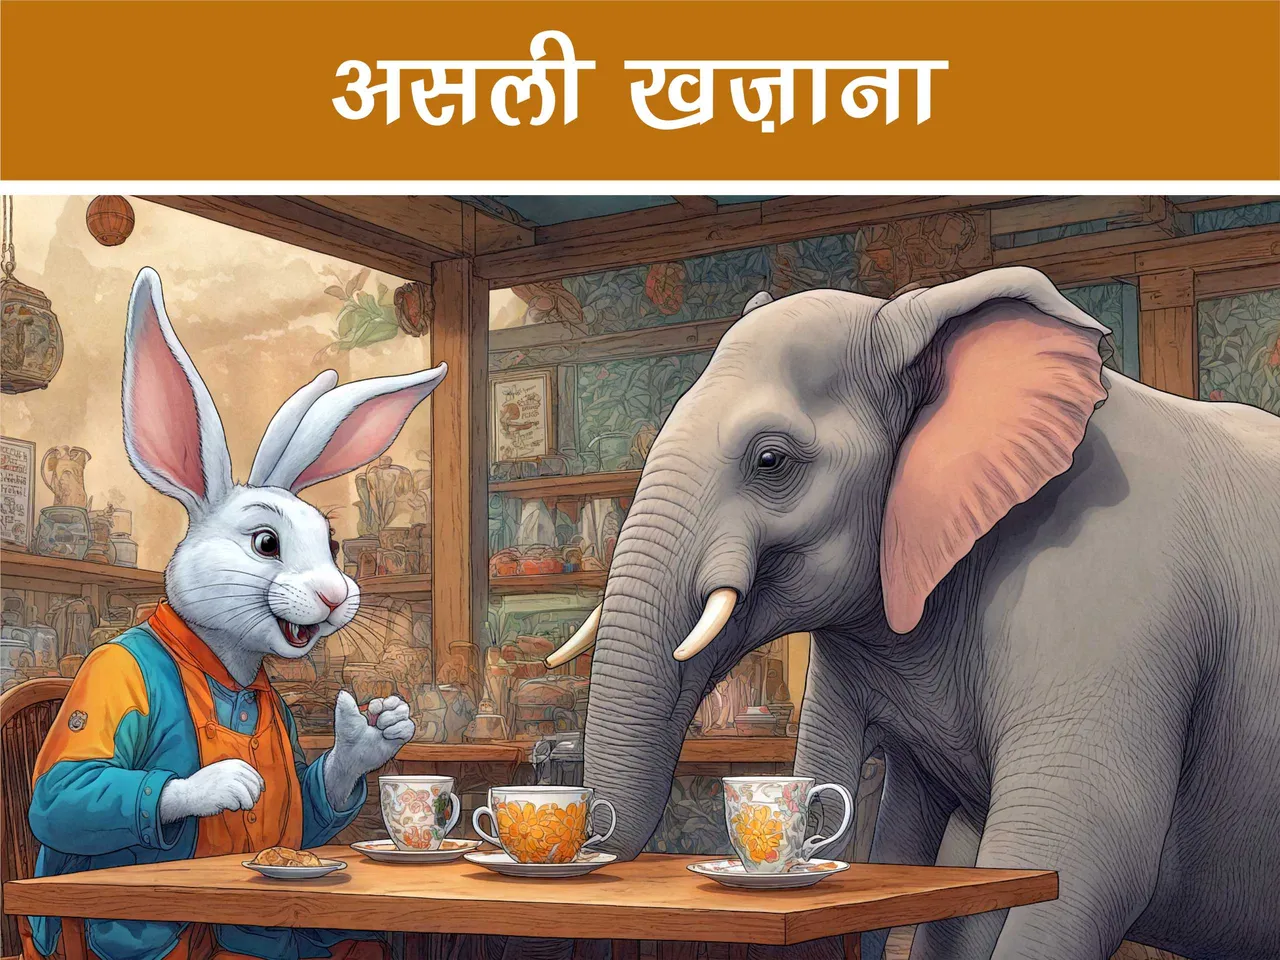 cartoon image of a rabbit and elephant